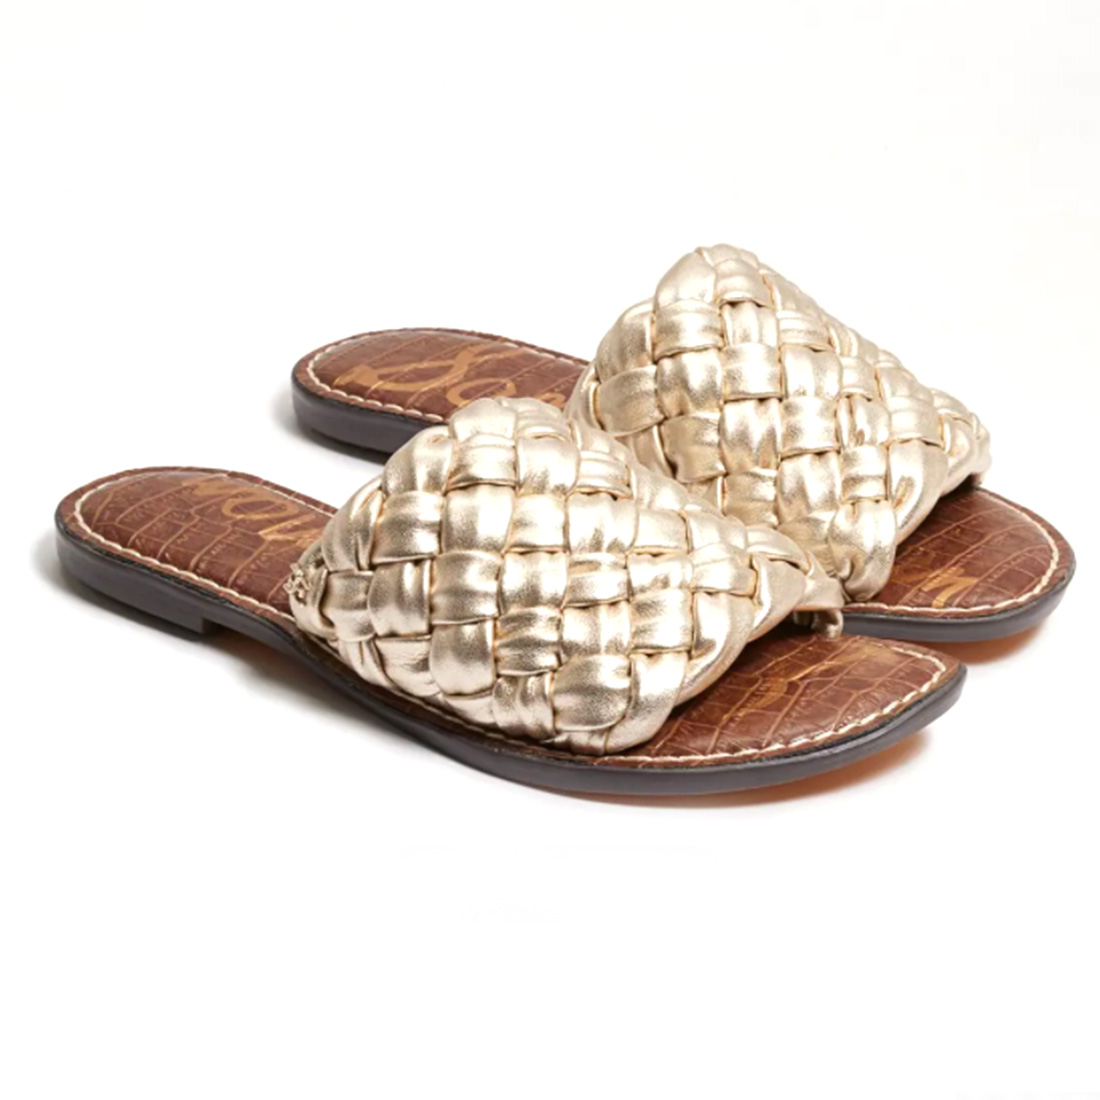 sam edelman griffin woven sandal in gold leaf jute leather 107344